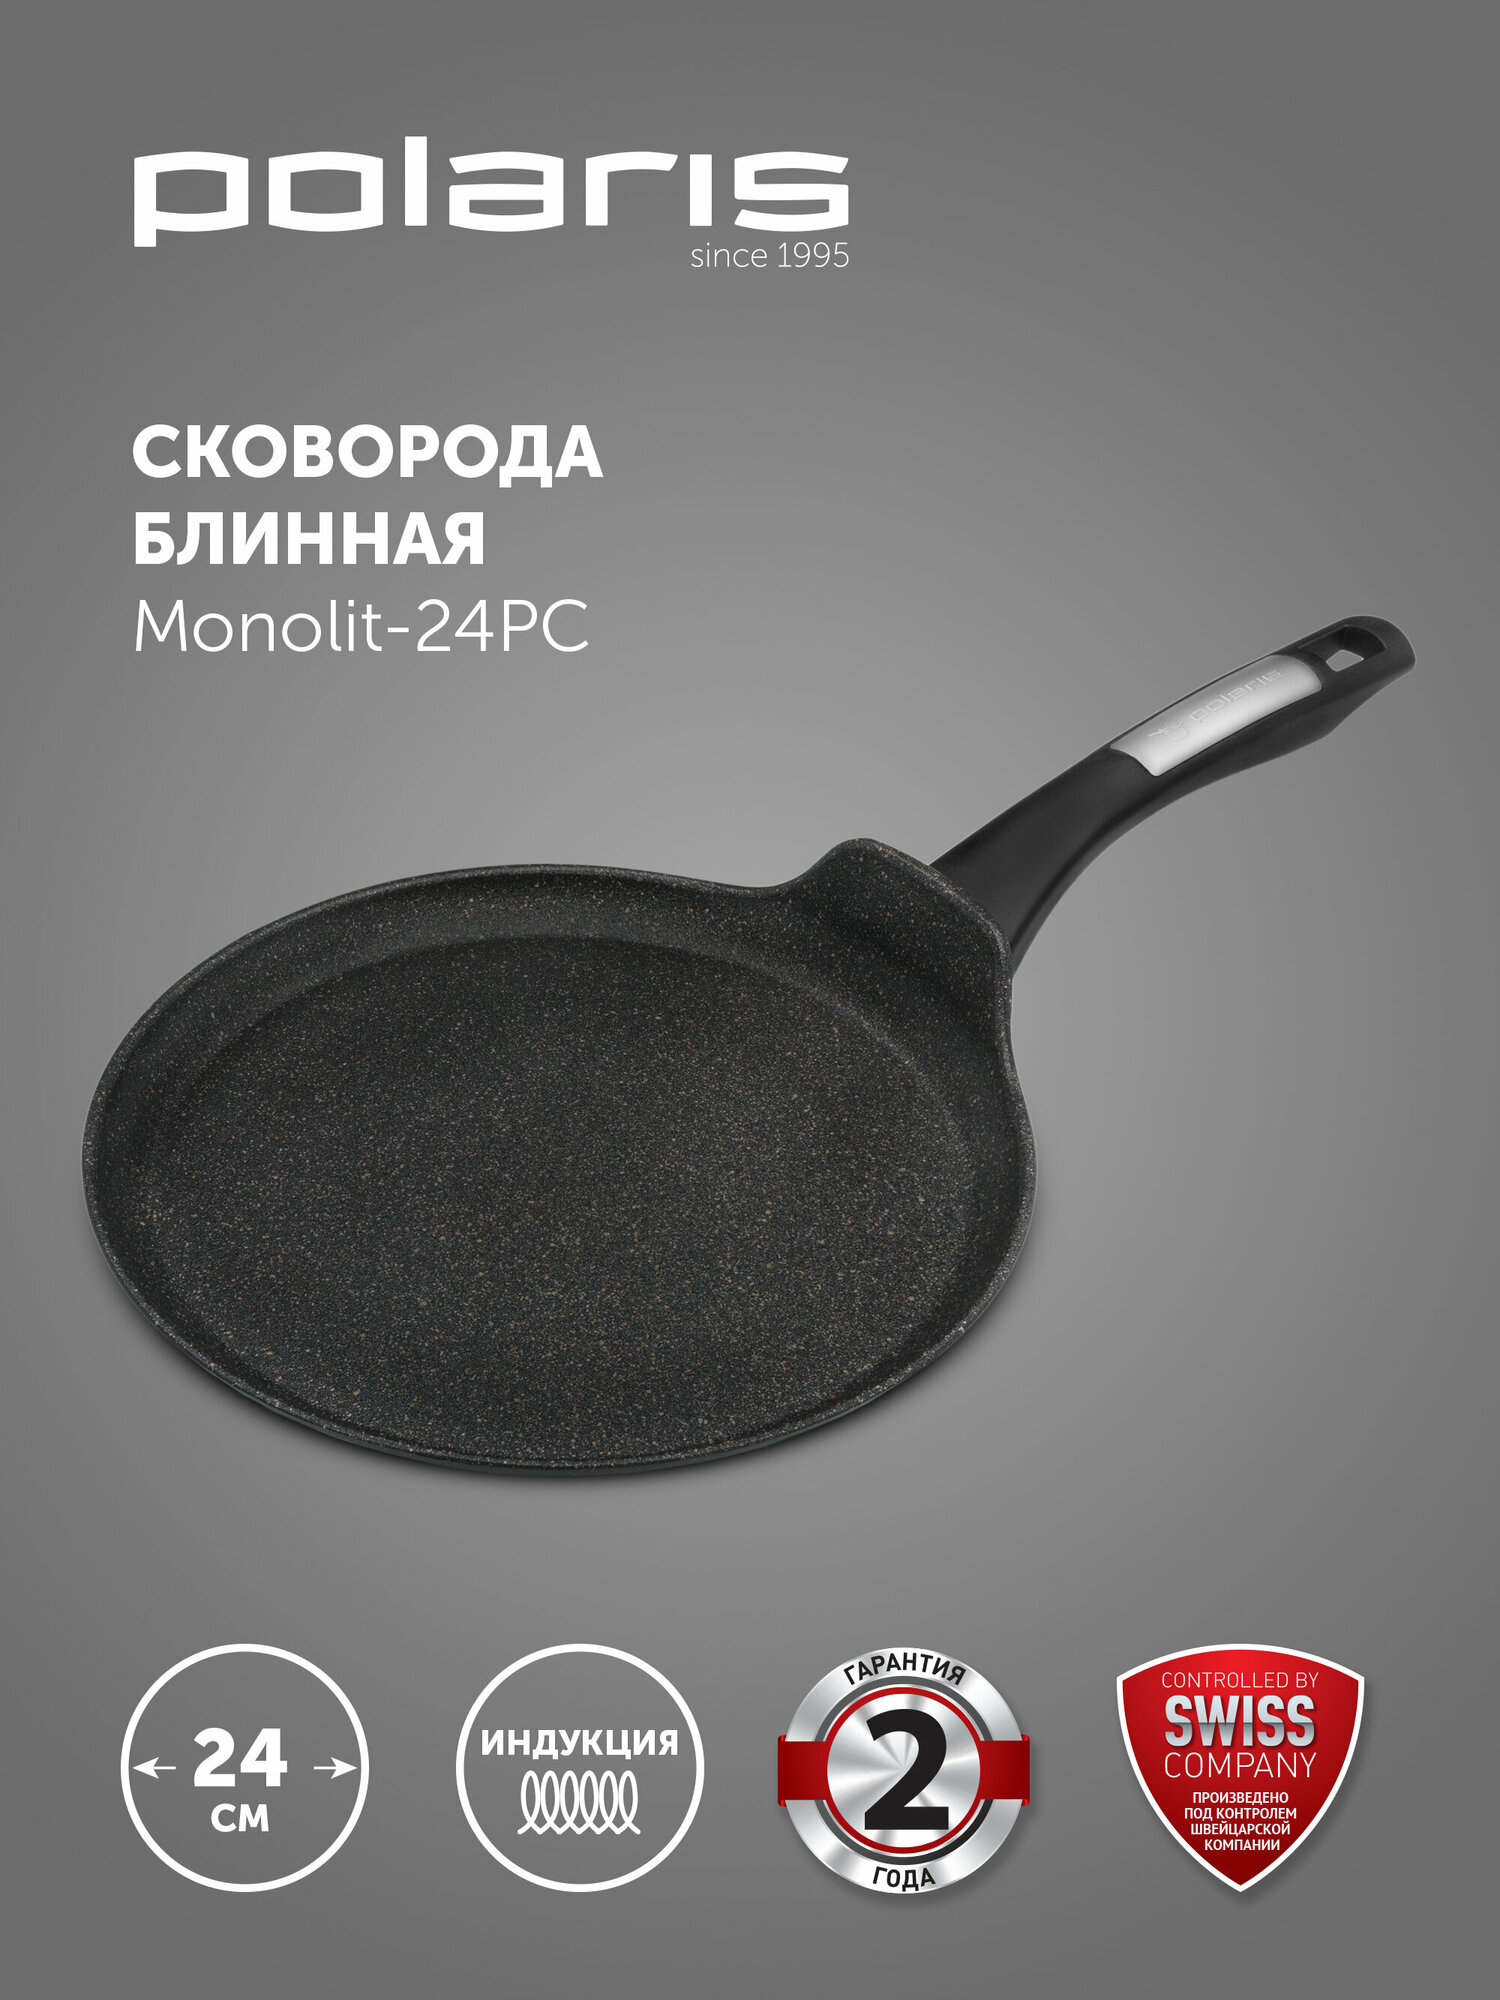 Сковорода блинная Monolit-24PC ков. ал, 24 см (POLARIS)